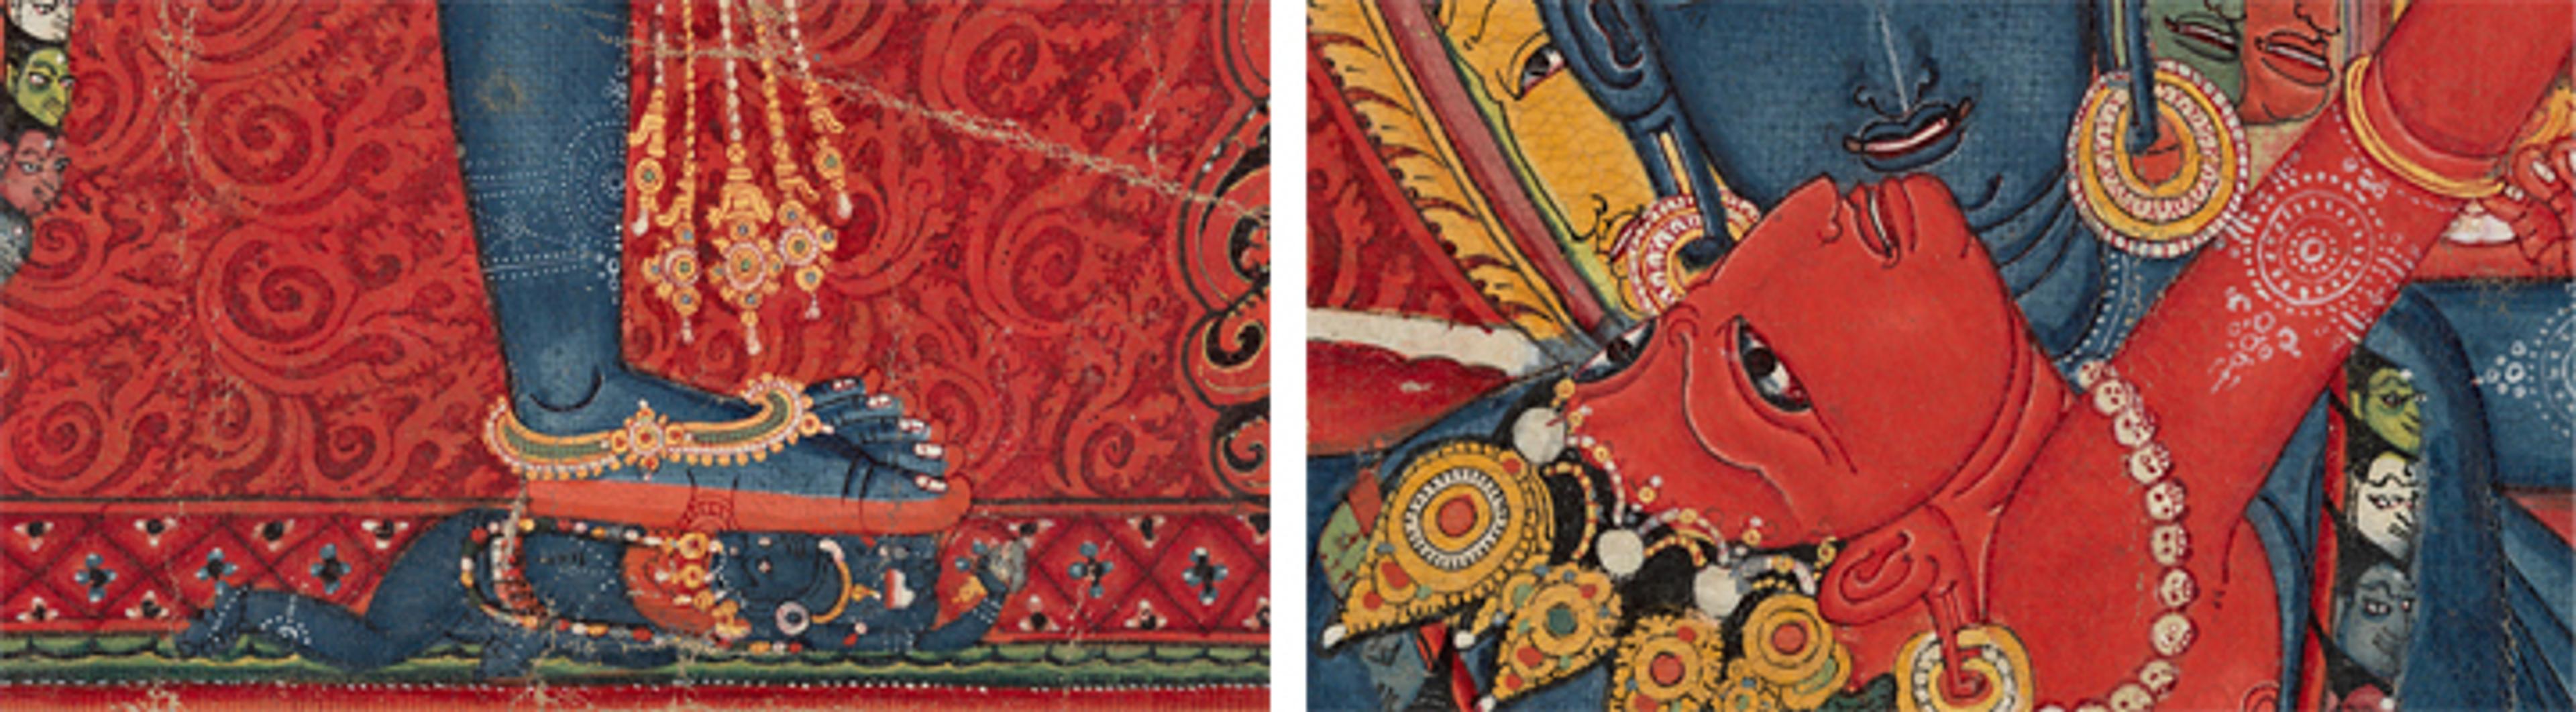 Two close-up views of a the Tibetan painting Chakrasamvara and consort Vajravarahi